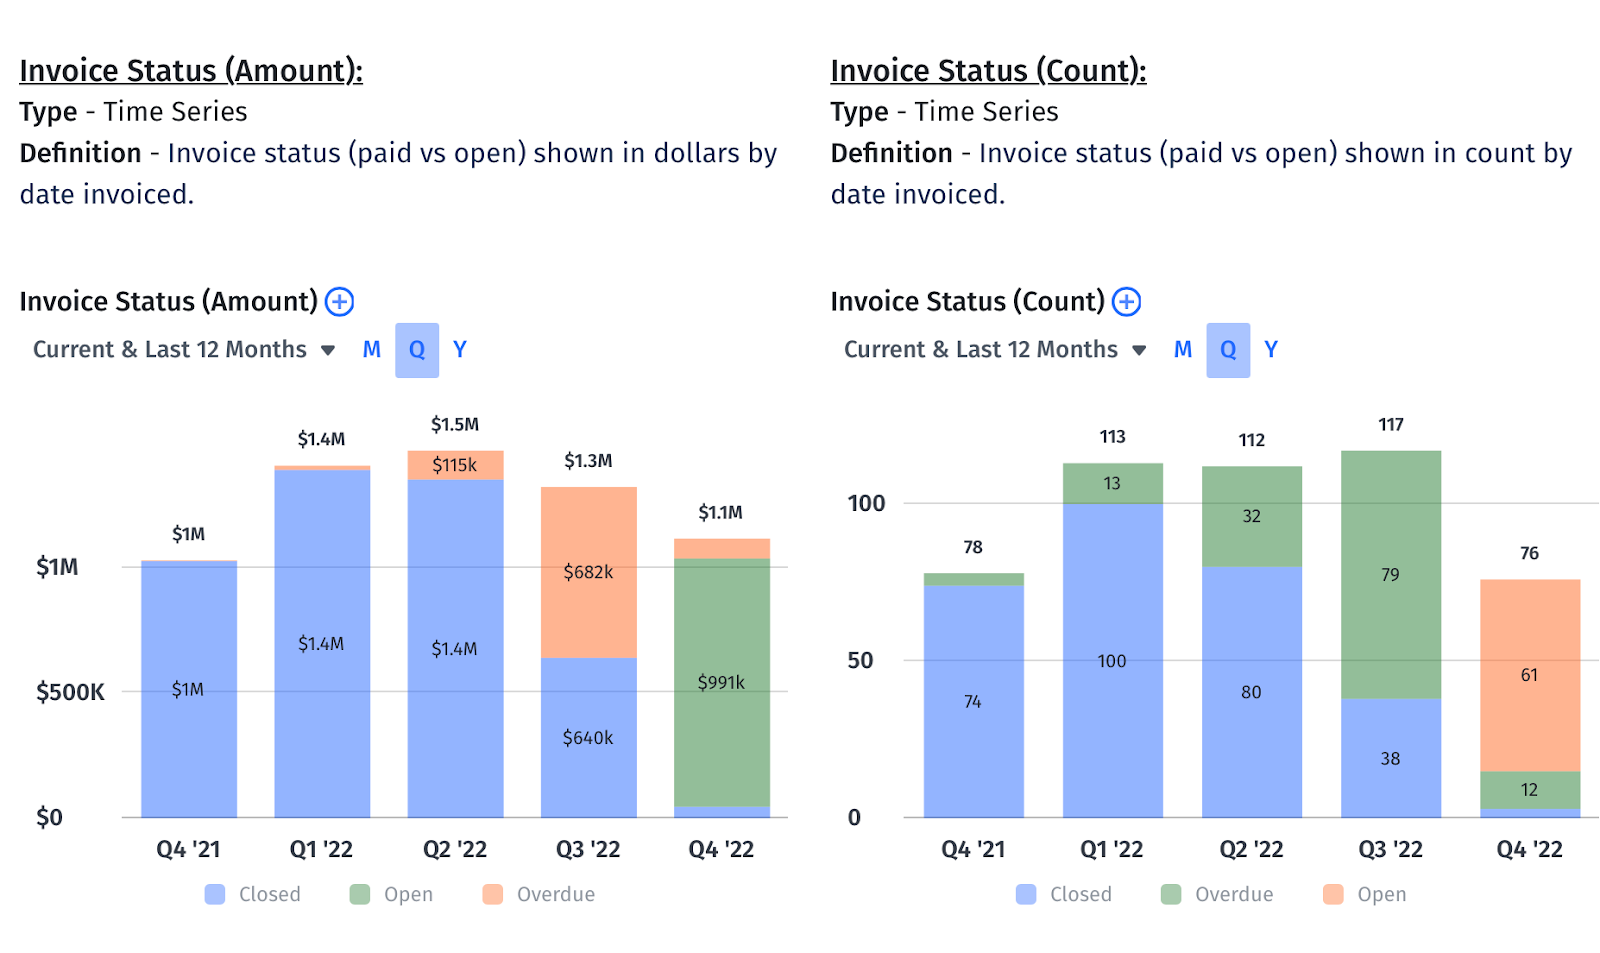 invoice status count and invoice status amount metrics in Mosaic